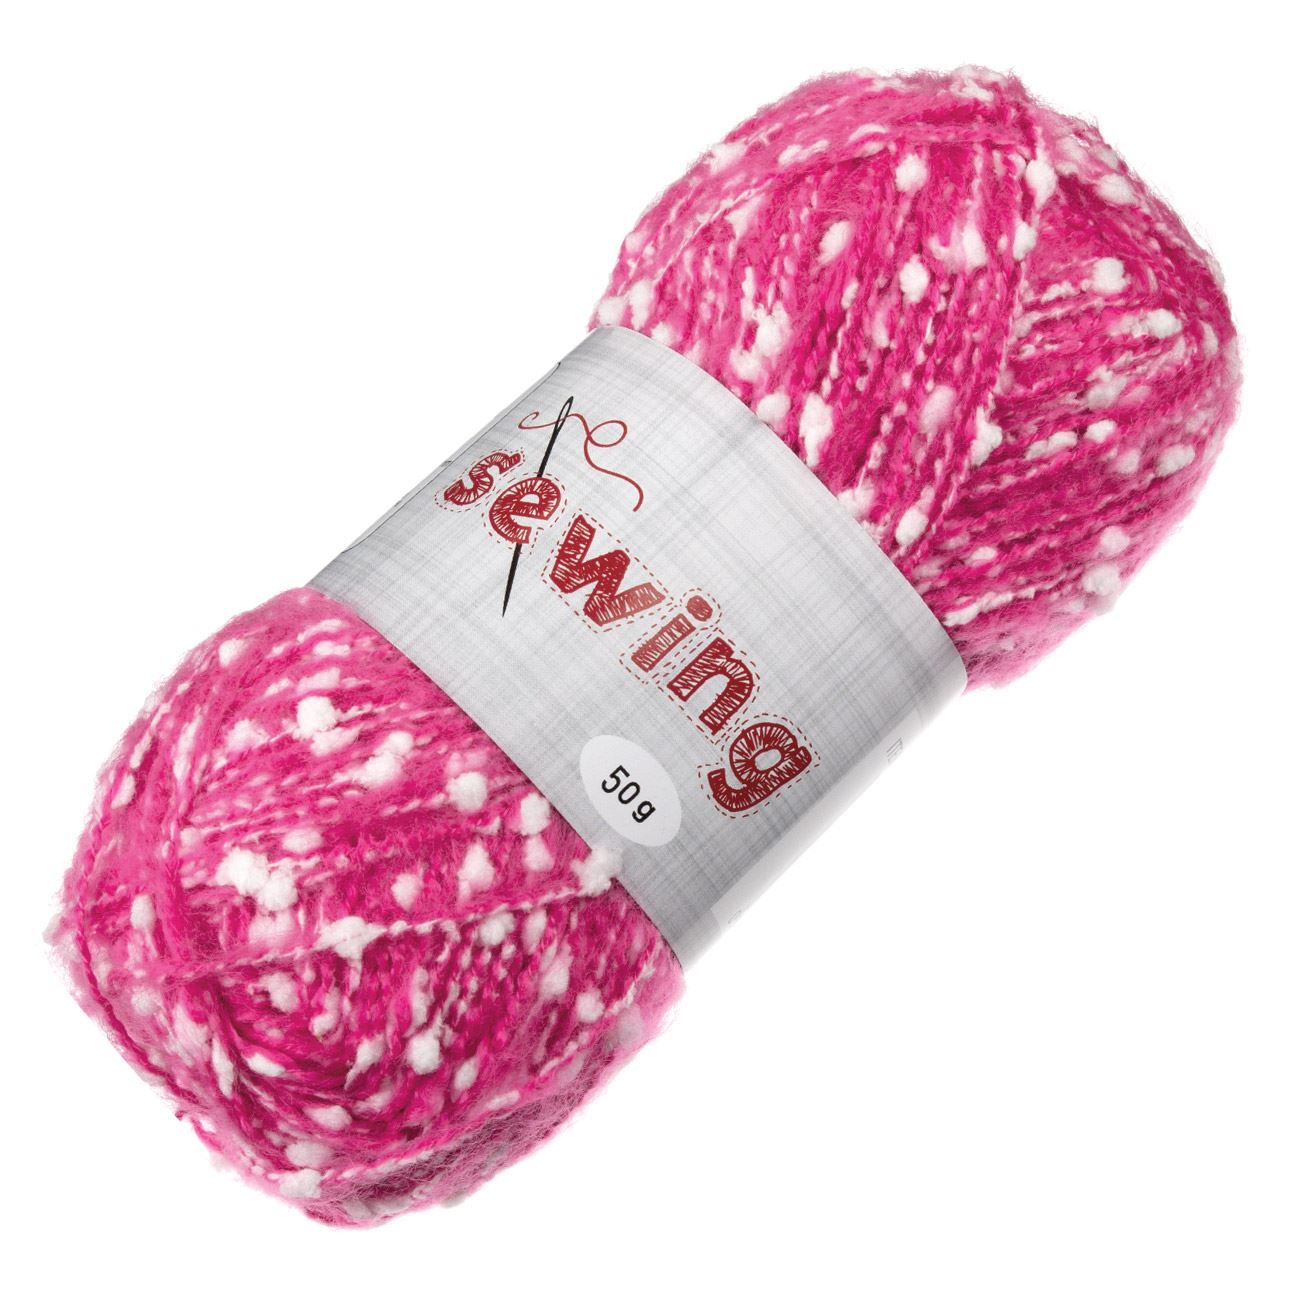 View the Internet shake wide Fir tricotat, Zola®, roz cu buline albe, 50 gr - eMAG.ro